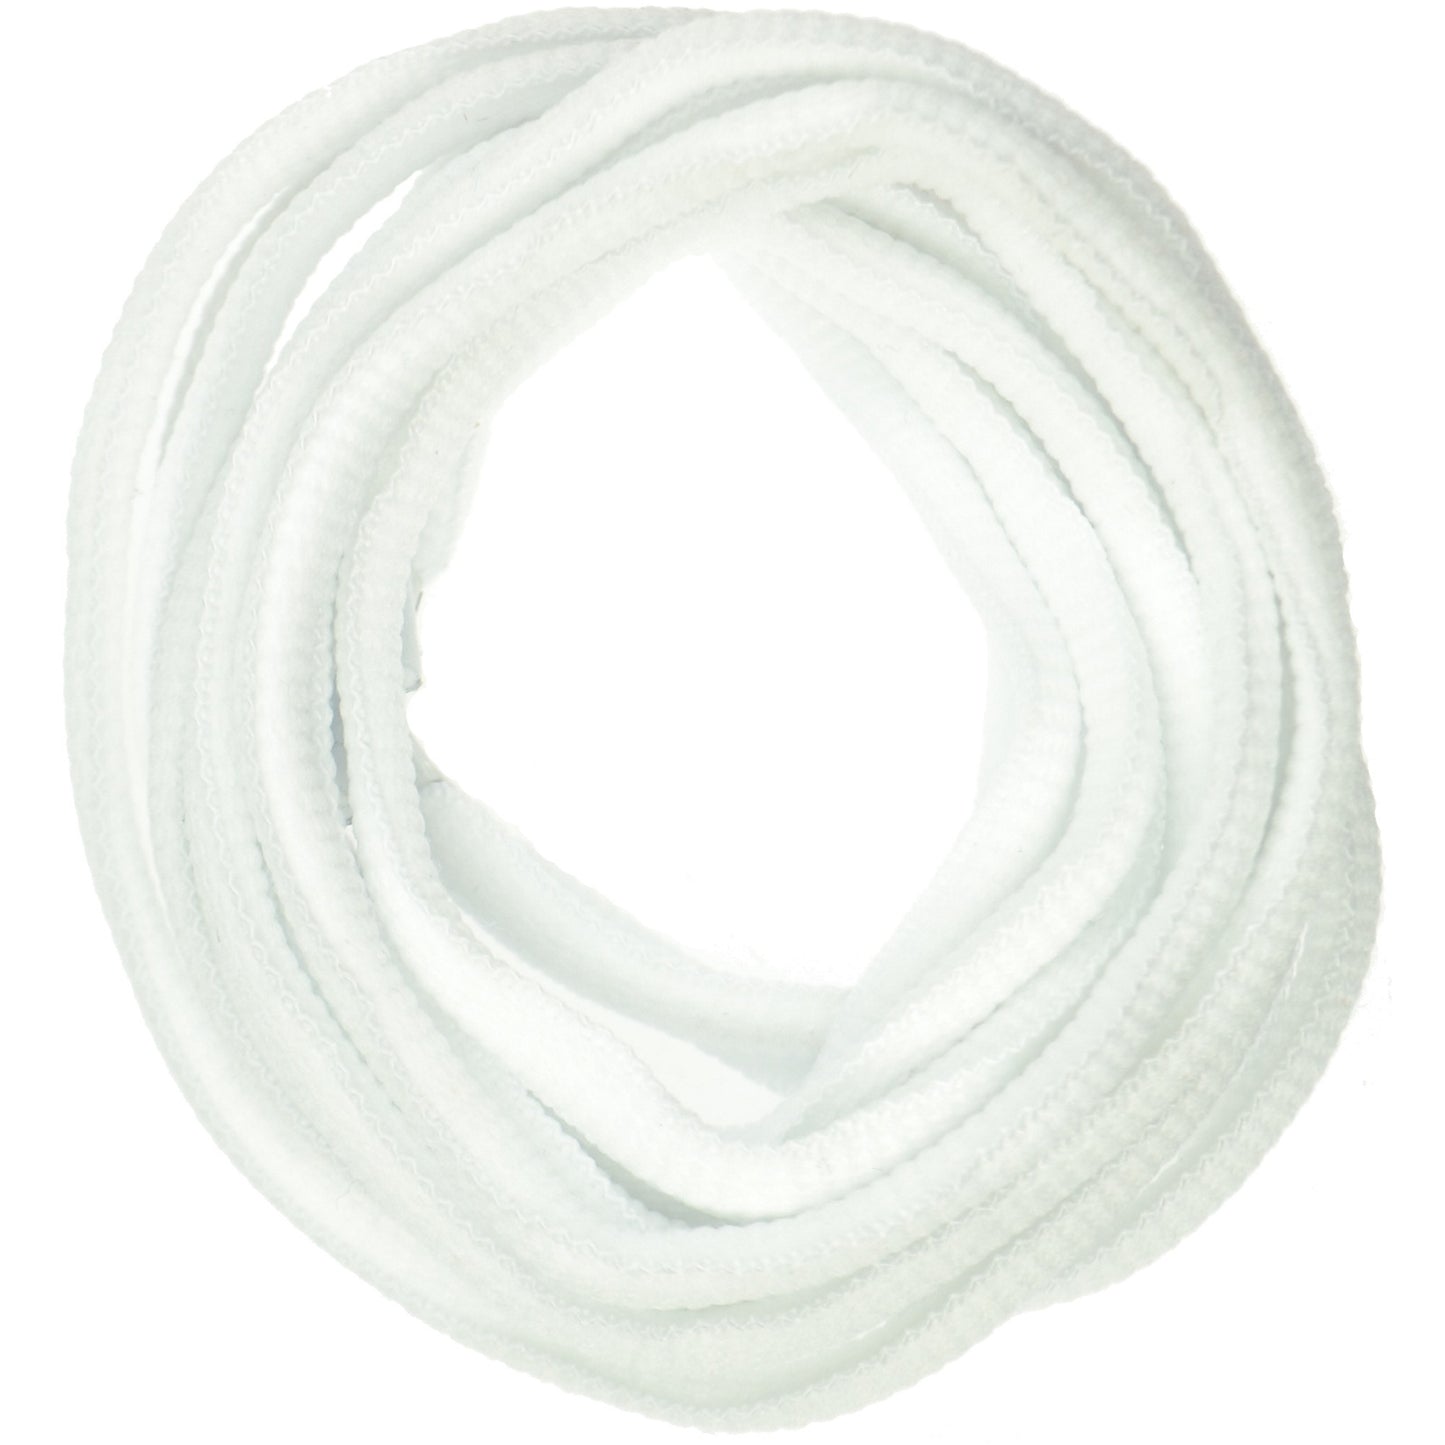 150cm Oval Sports Shoe Laces - White